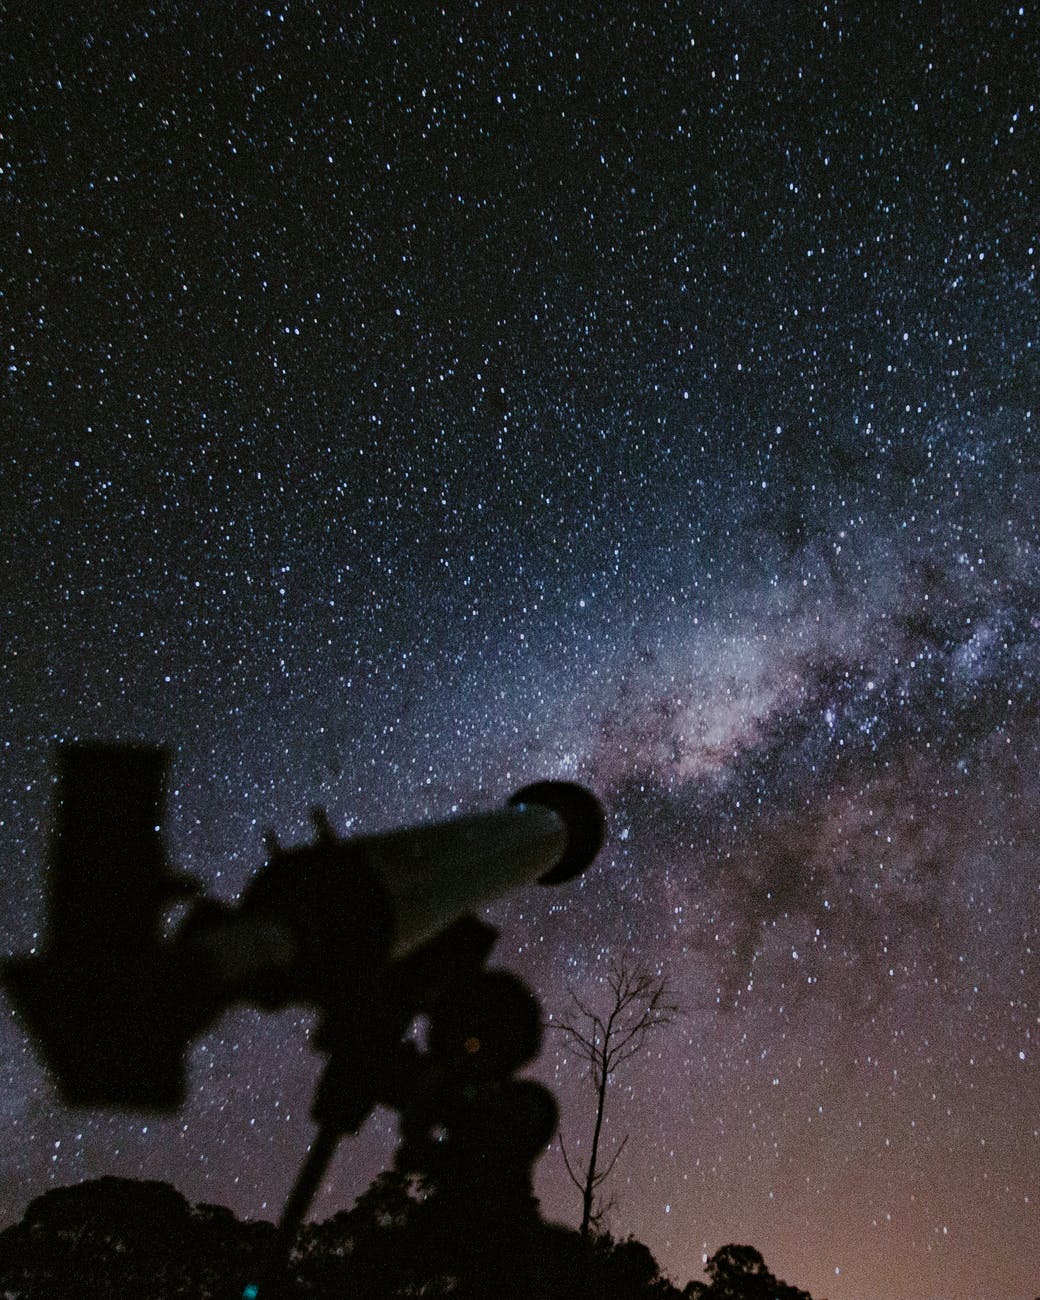 telescope pointing at milky way galaxy at night